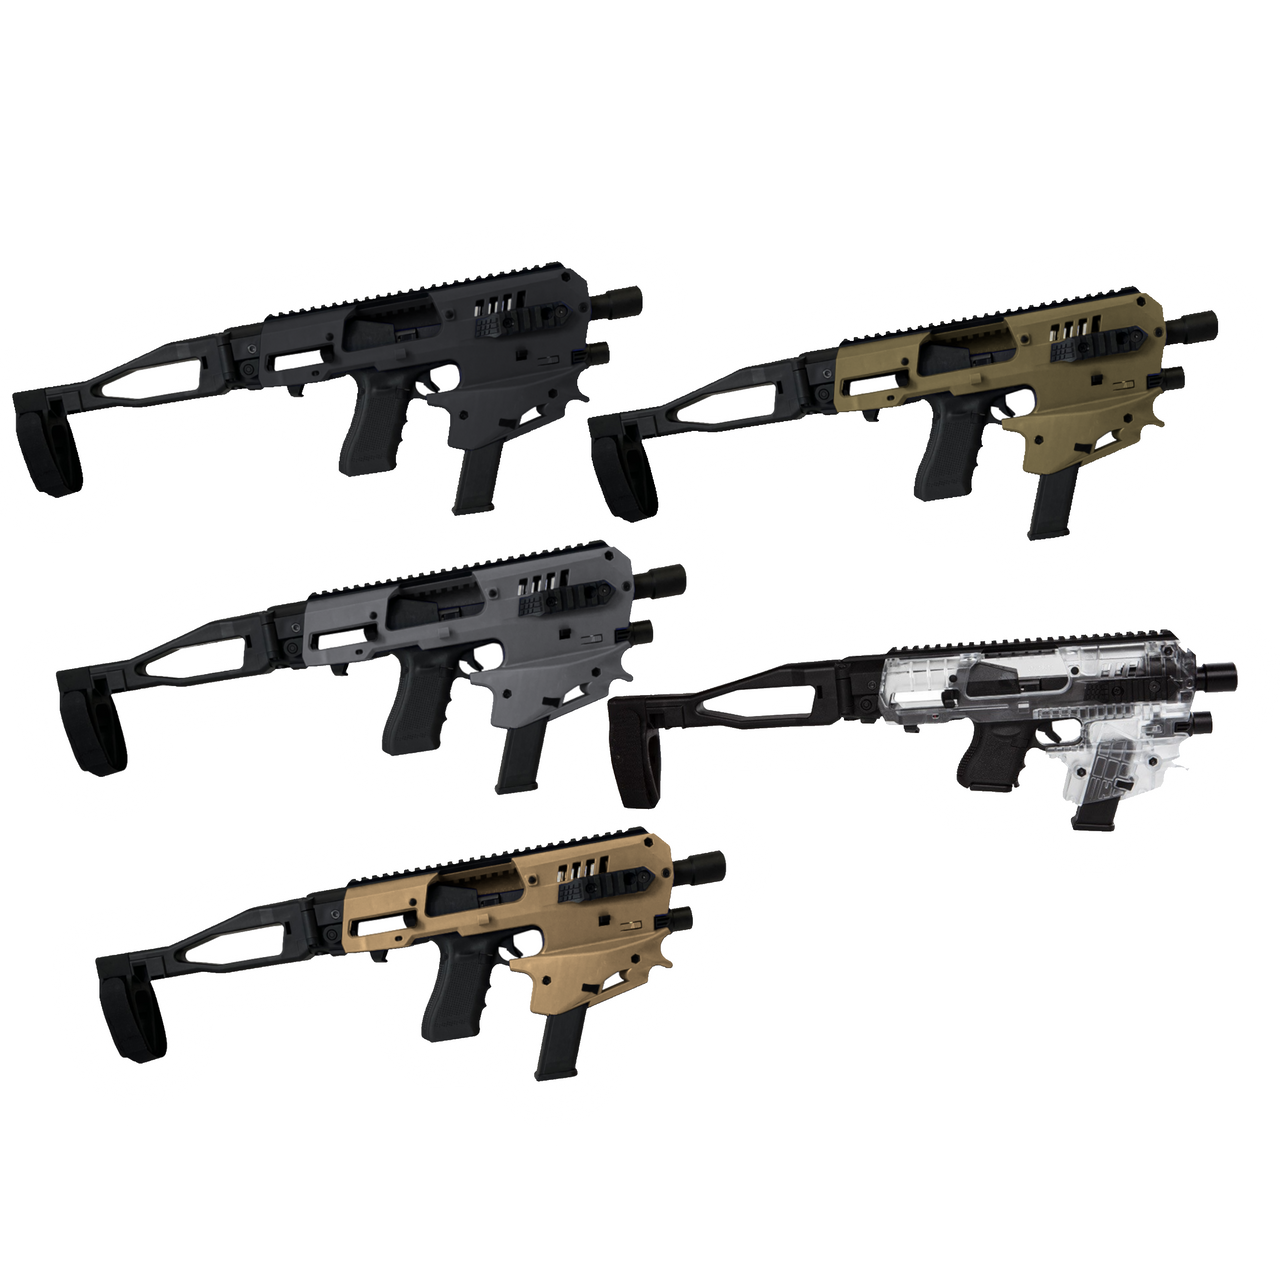 Handgun Conversion Kits